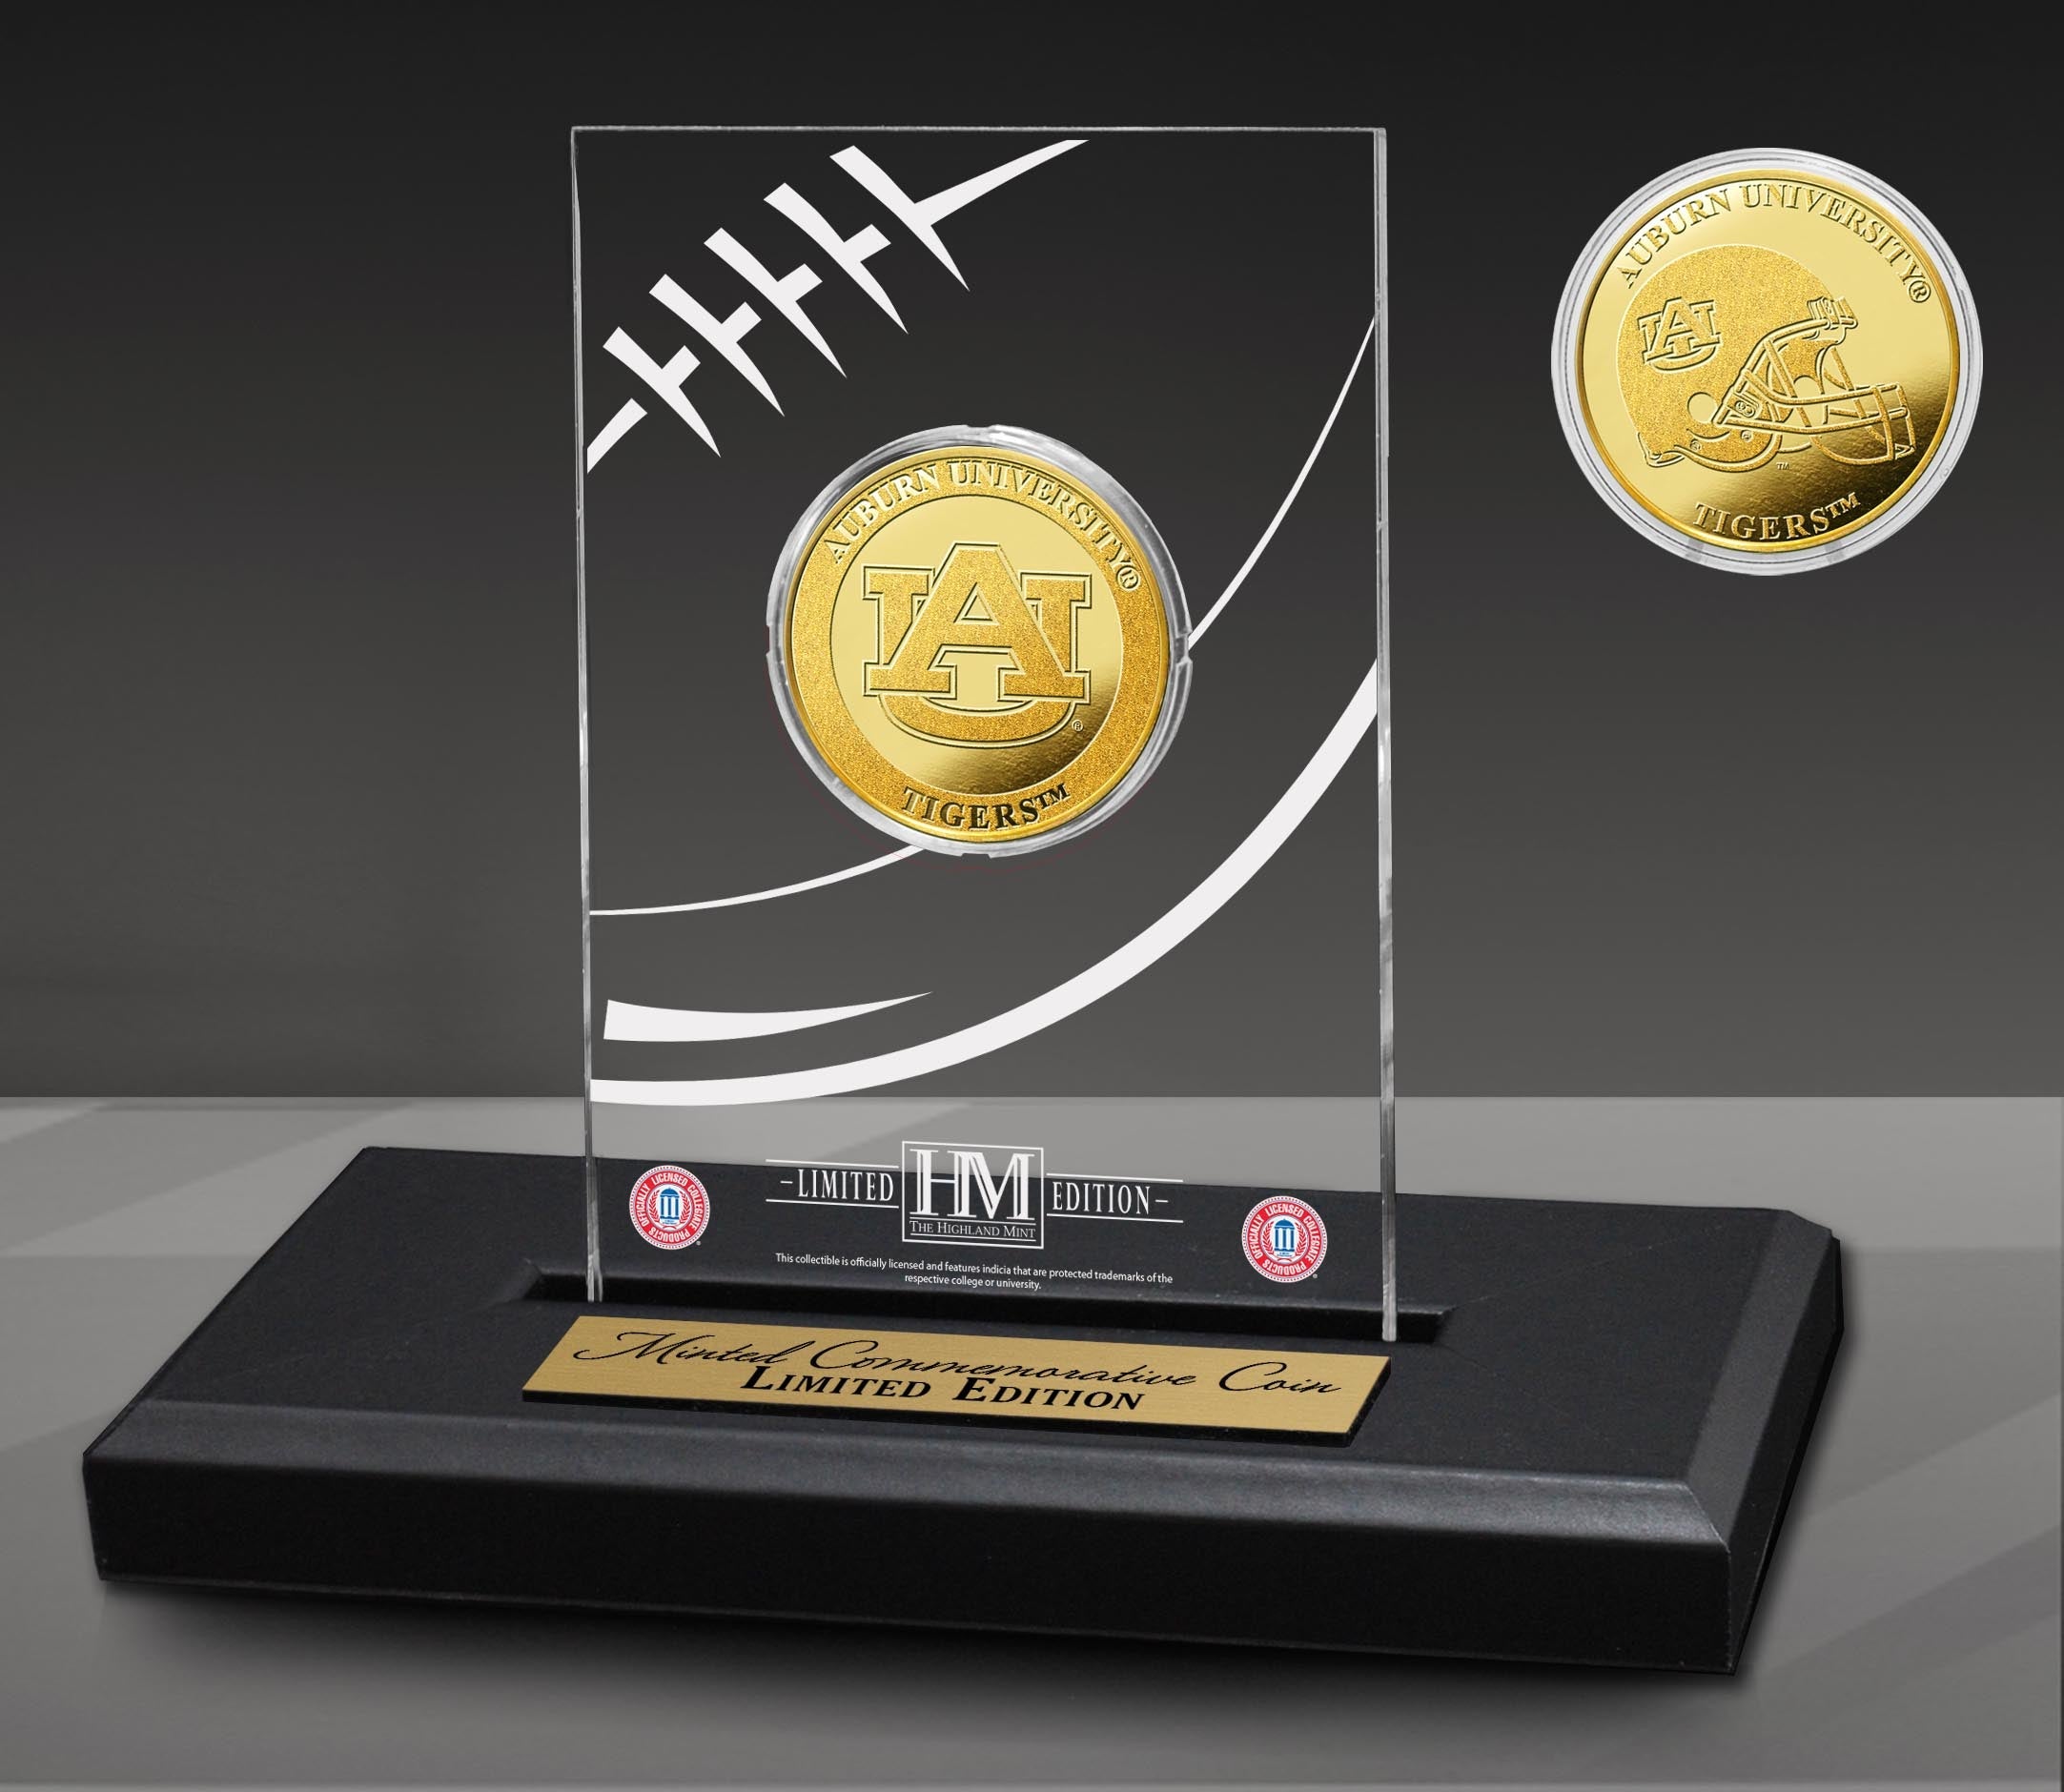 Auburn University Tigers Gold Coin in Acrylic Display